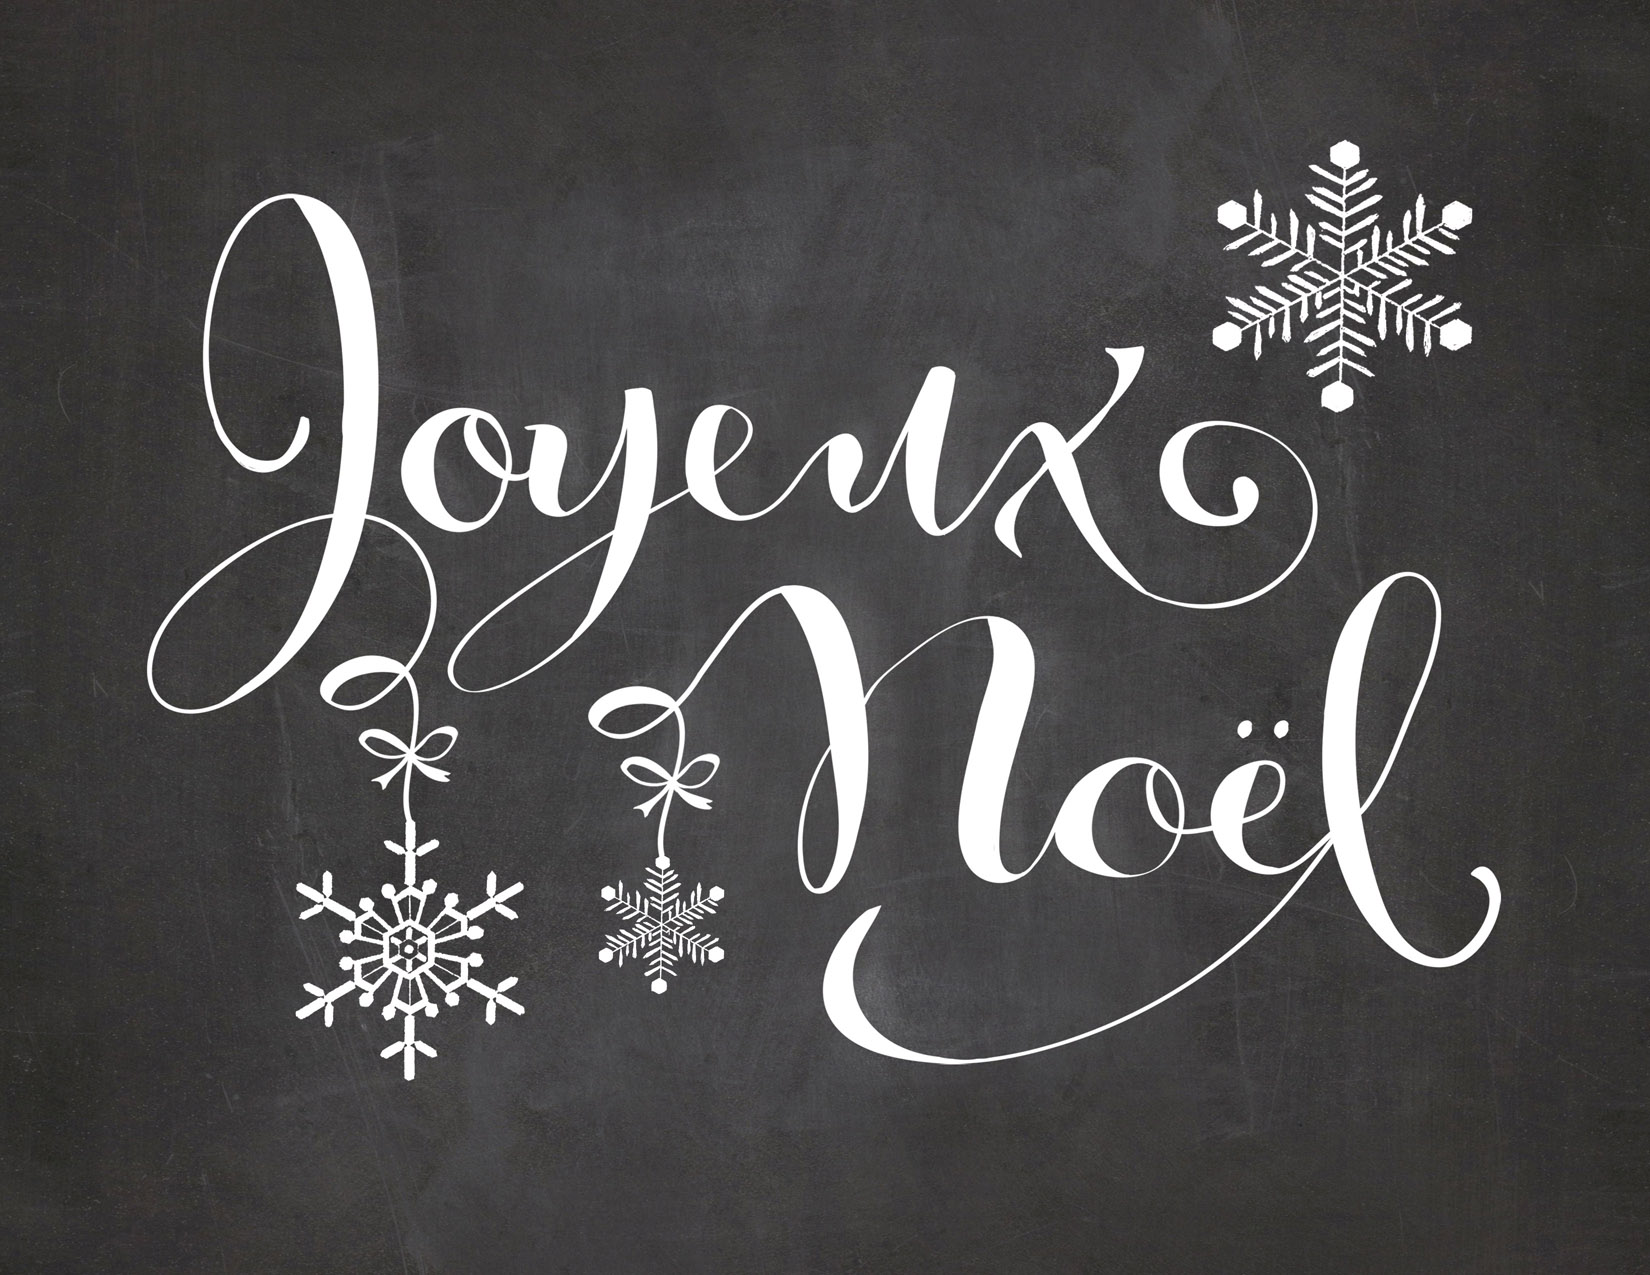 Joyeaux Noel Sign